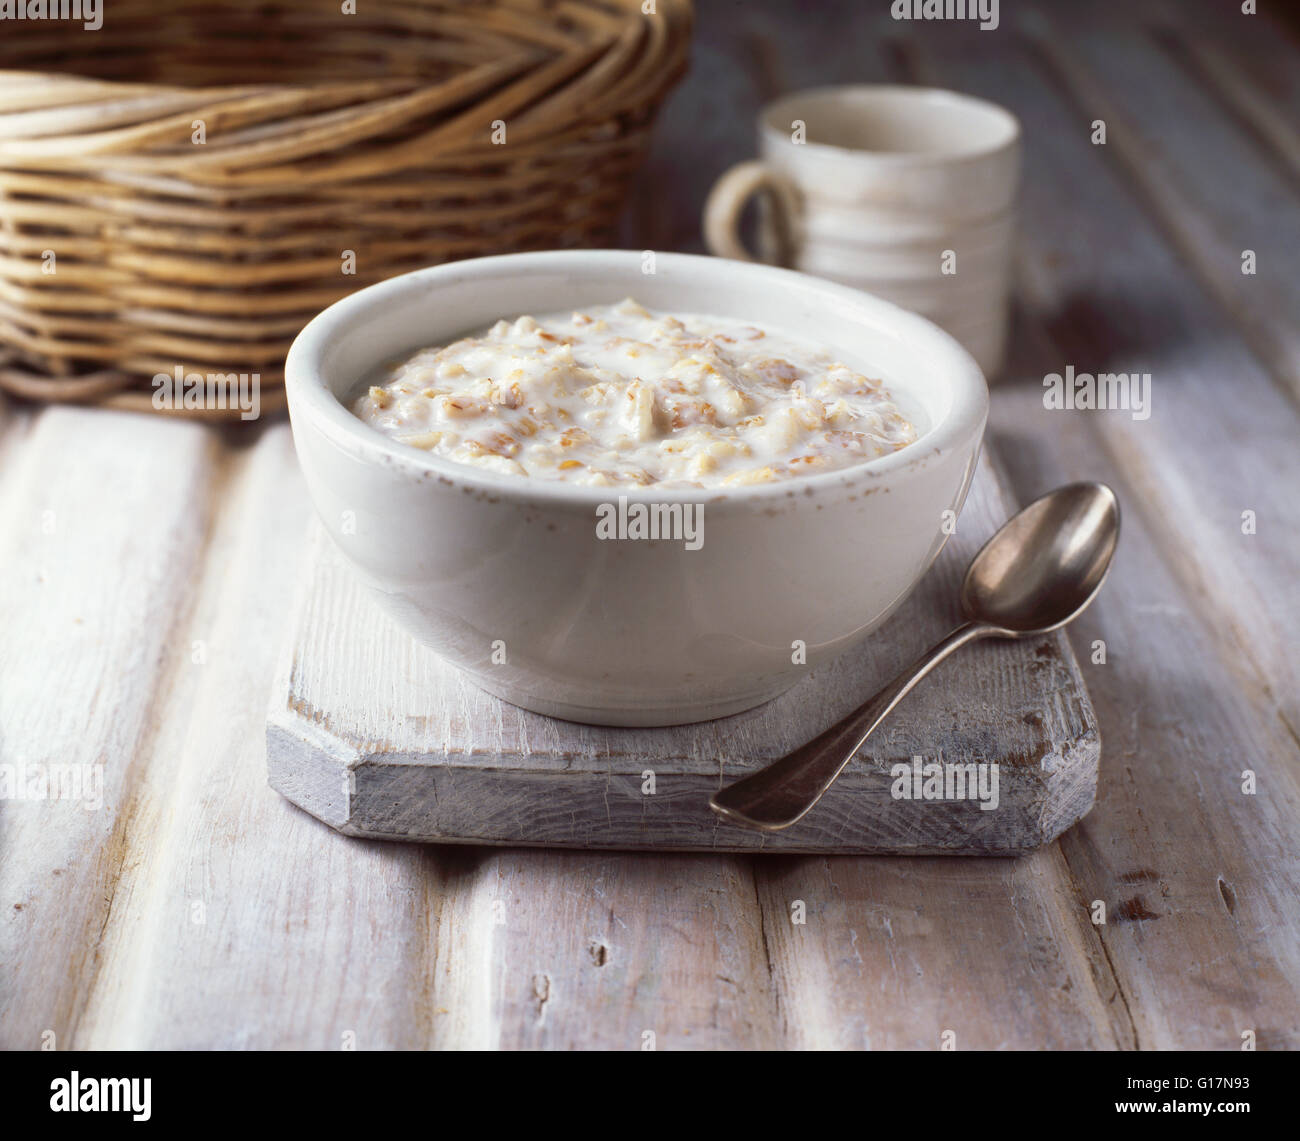 Bowl of porridge, close-up Stock Photo